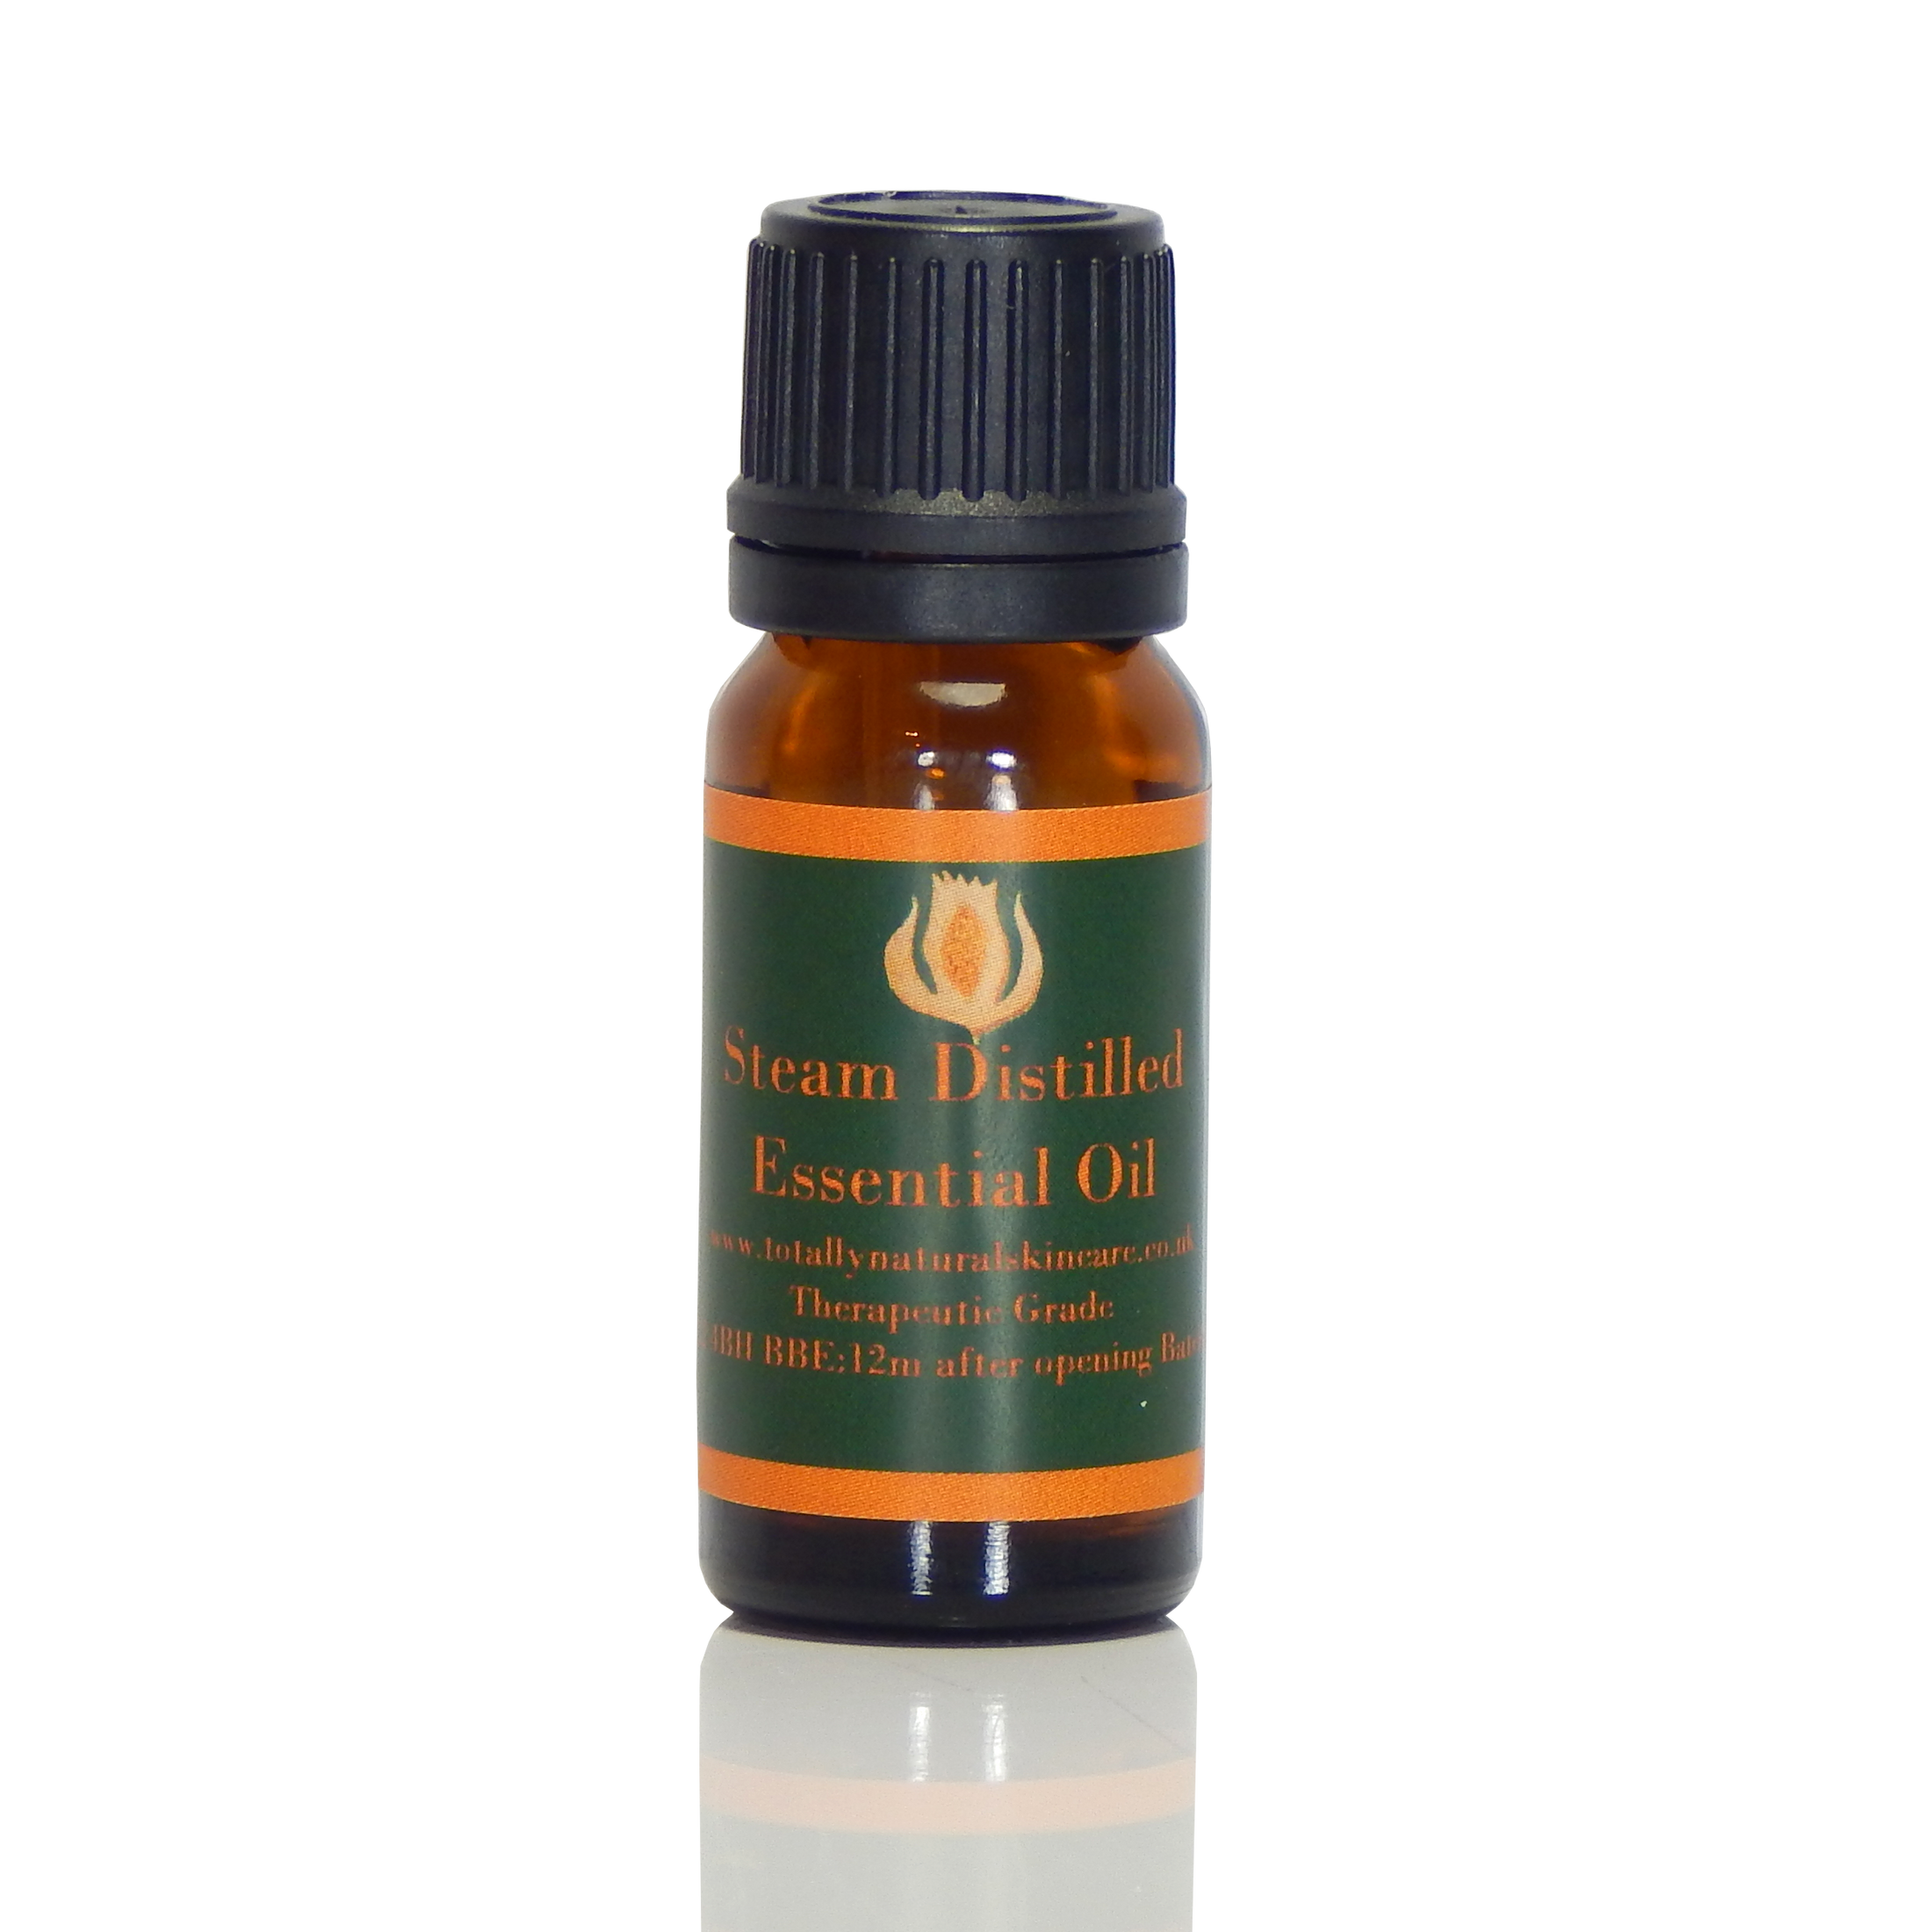 Mugwort essential oil - Artemis vulgaris